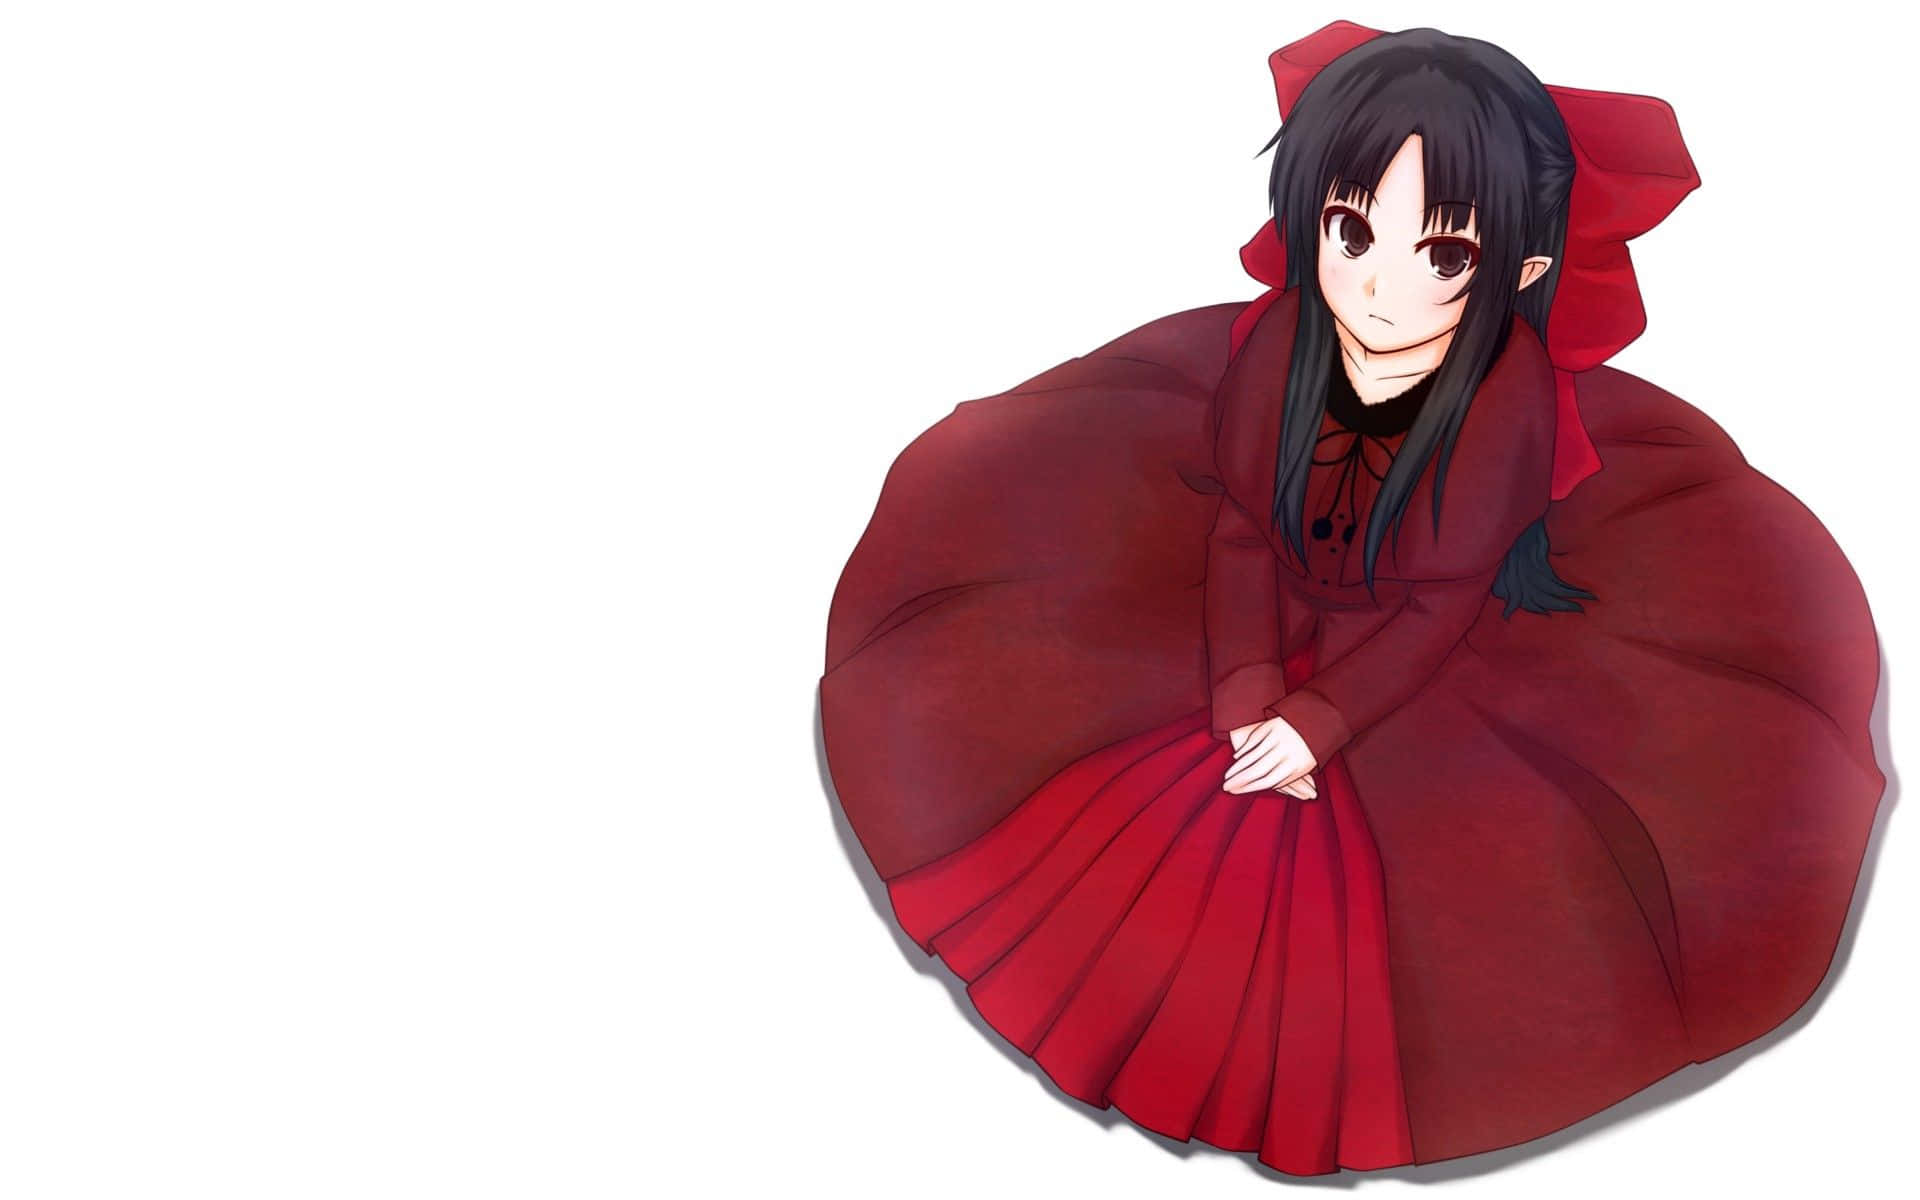 Chicade Anime Vistiendo Un Modesto Vestido Rojo. Fondo de pantalla